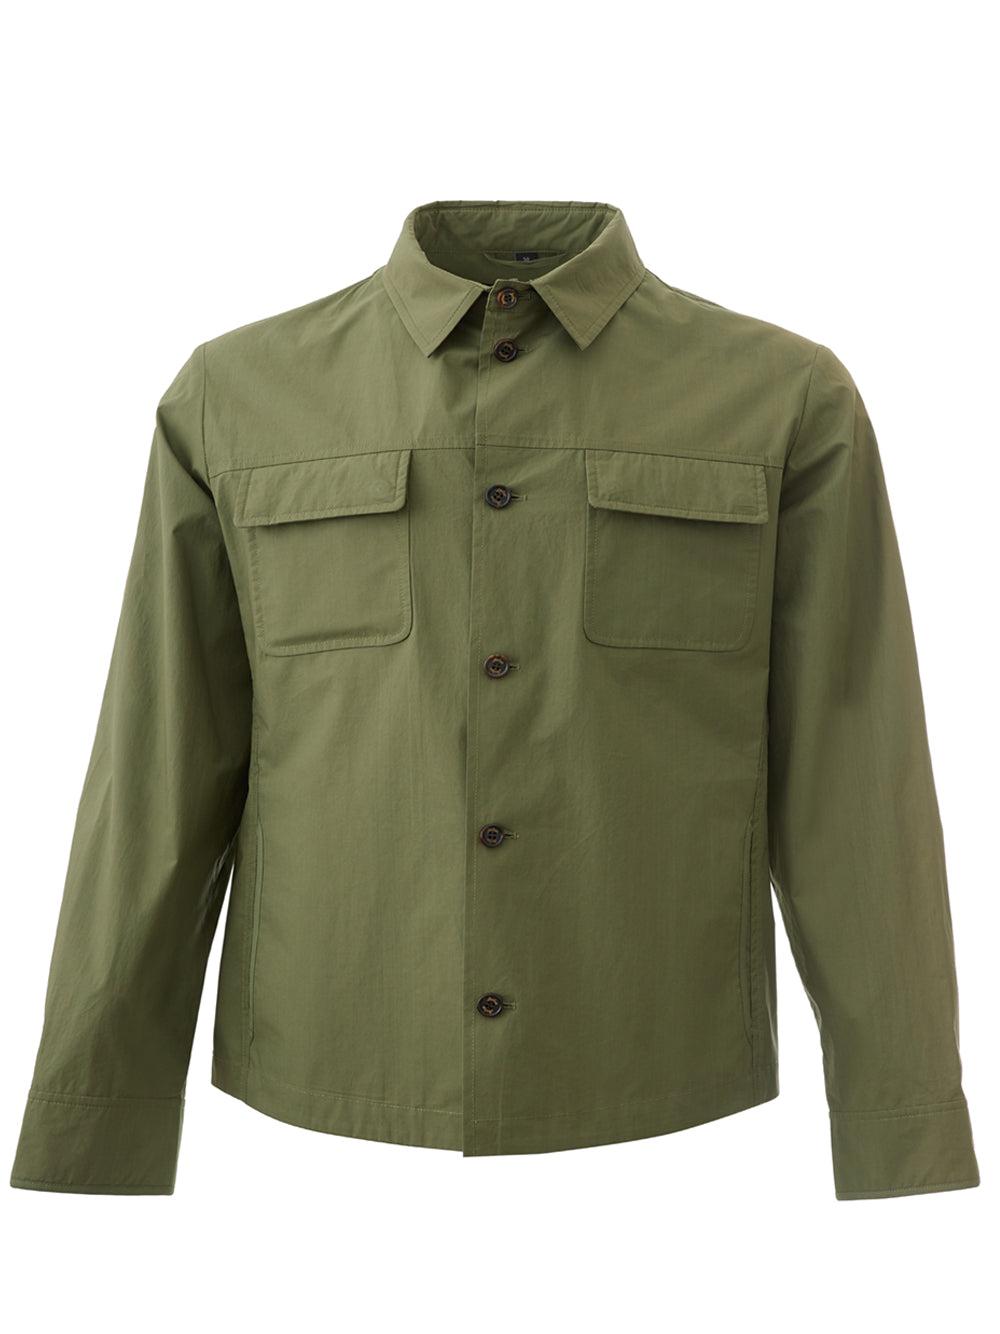 Sealup Green Cotton Saharan Jacket for Men | Lyst